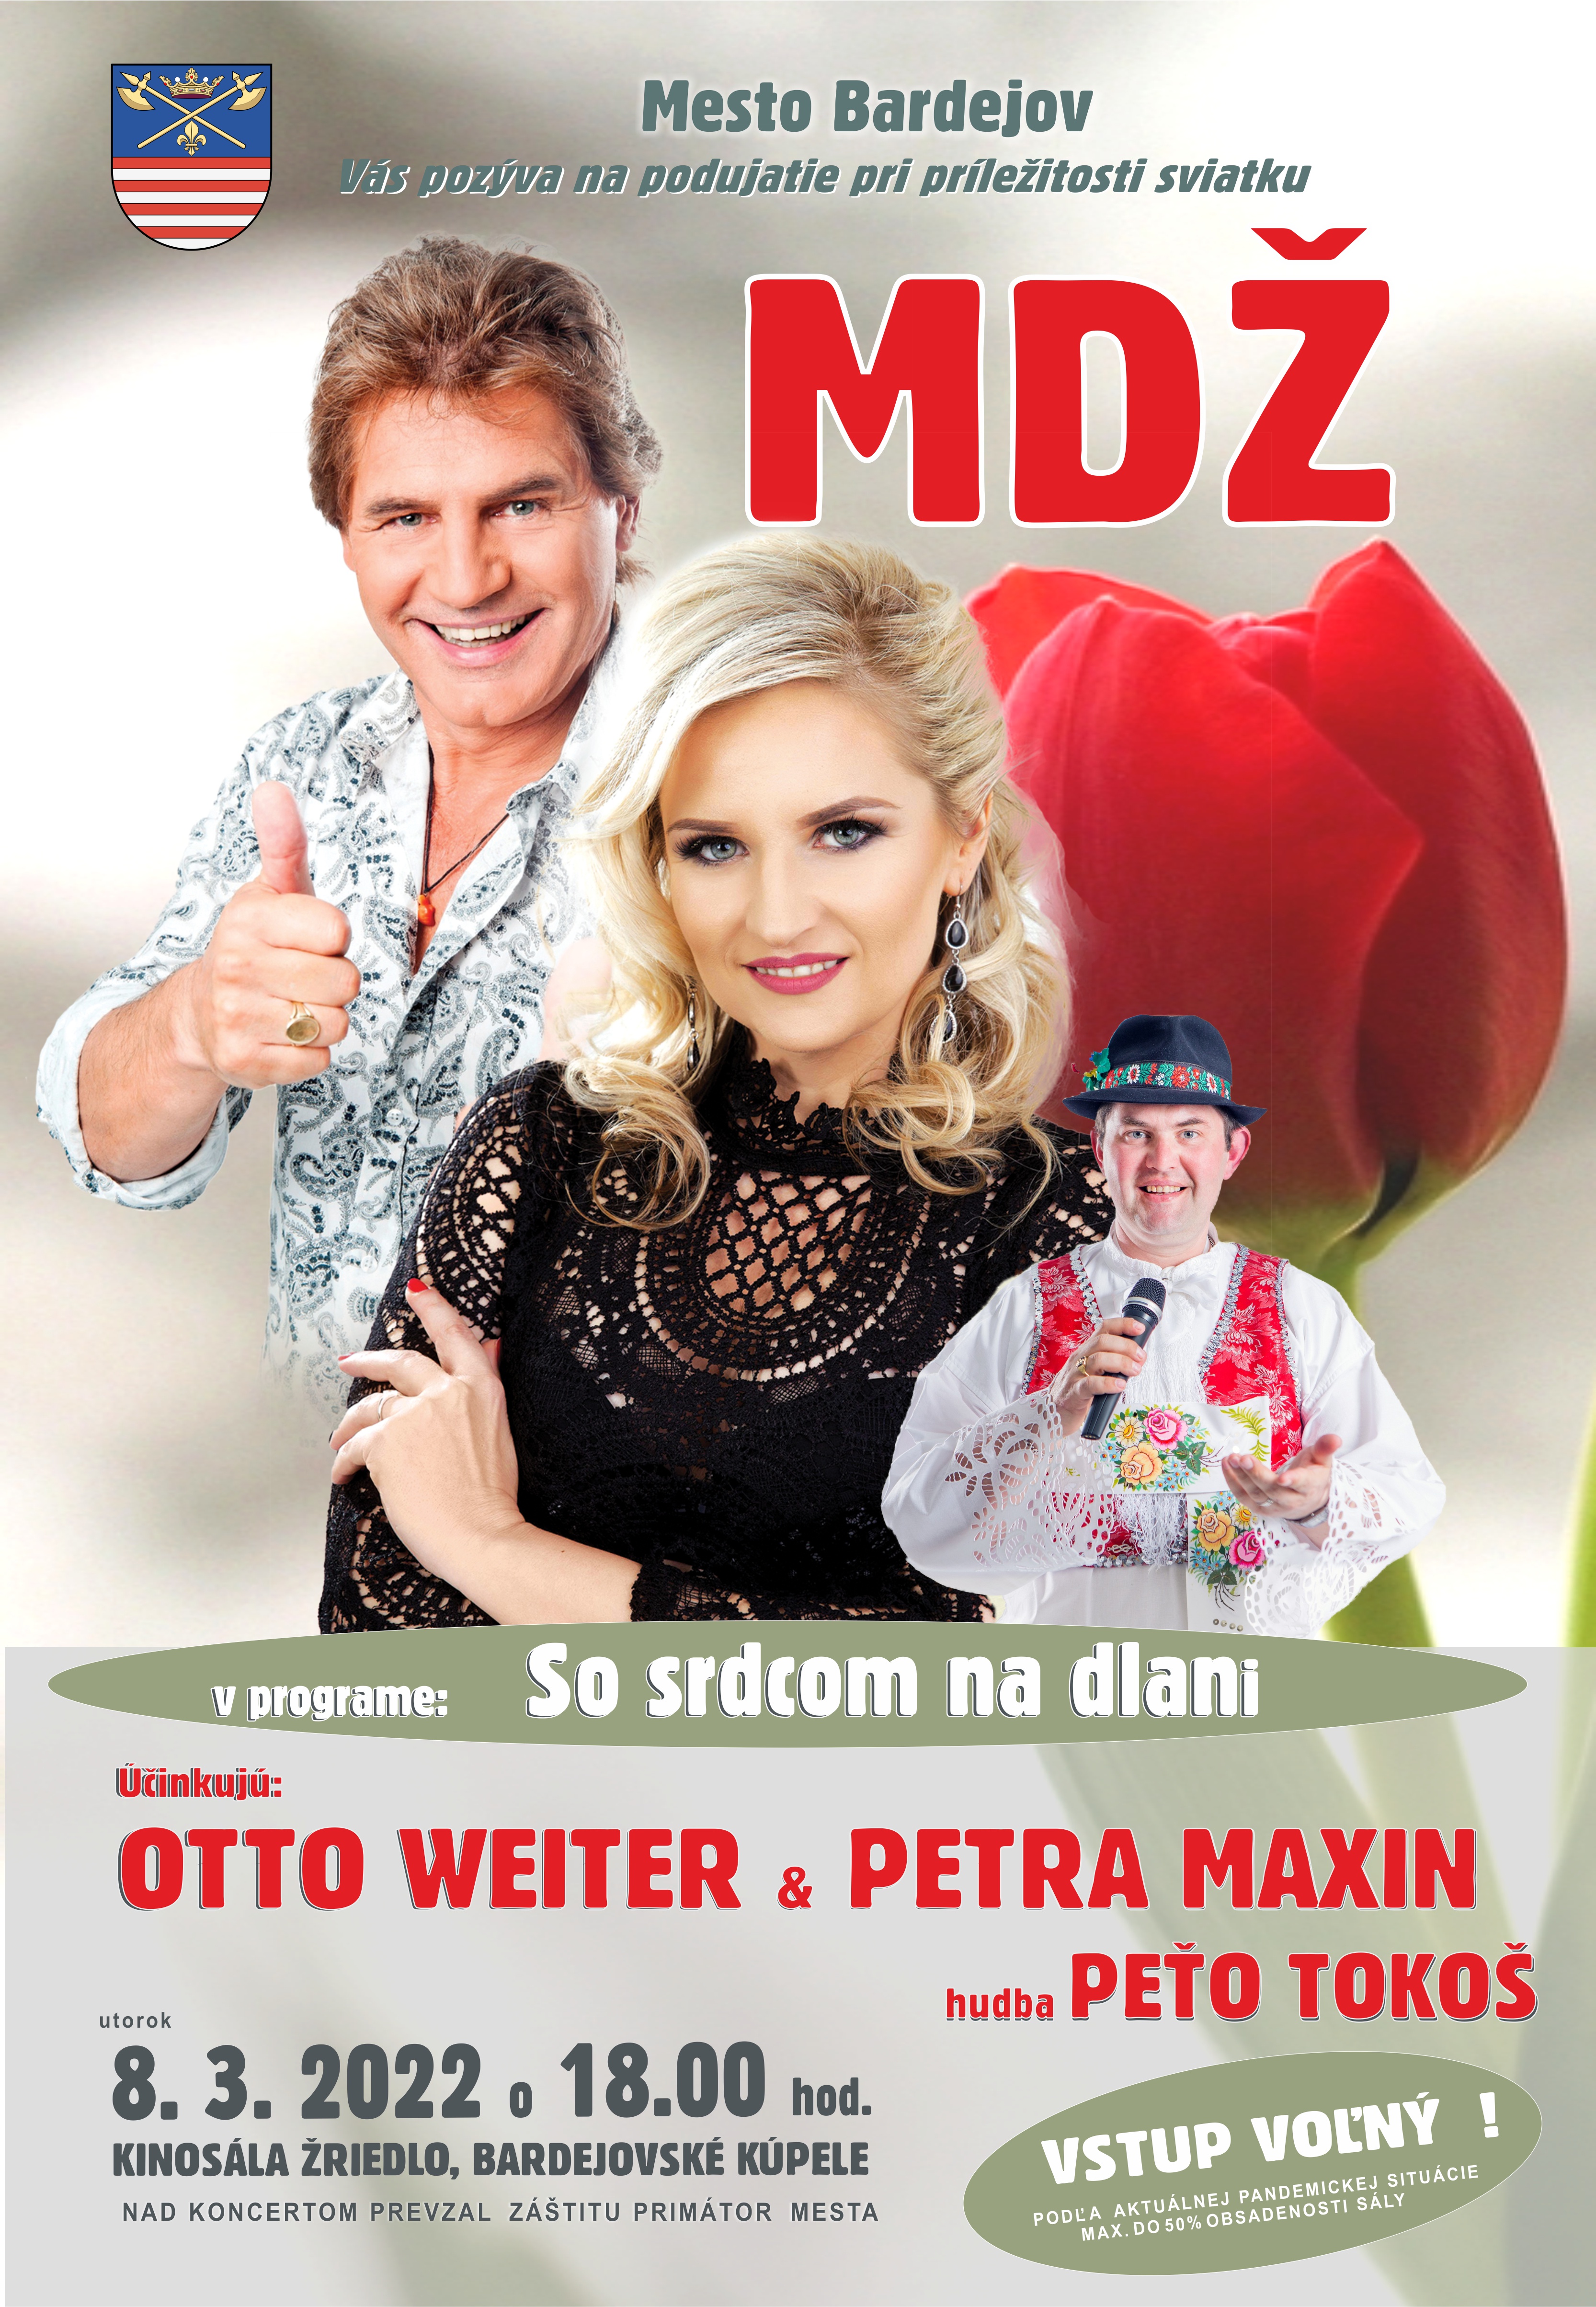 mdž 2022 poster